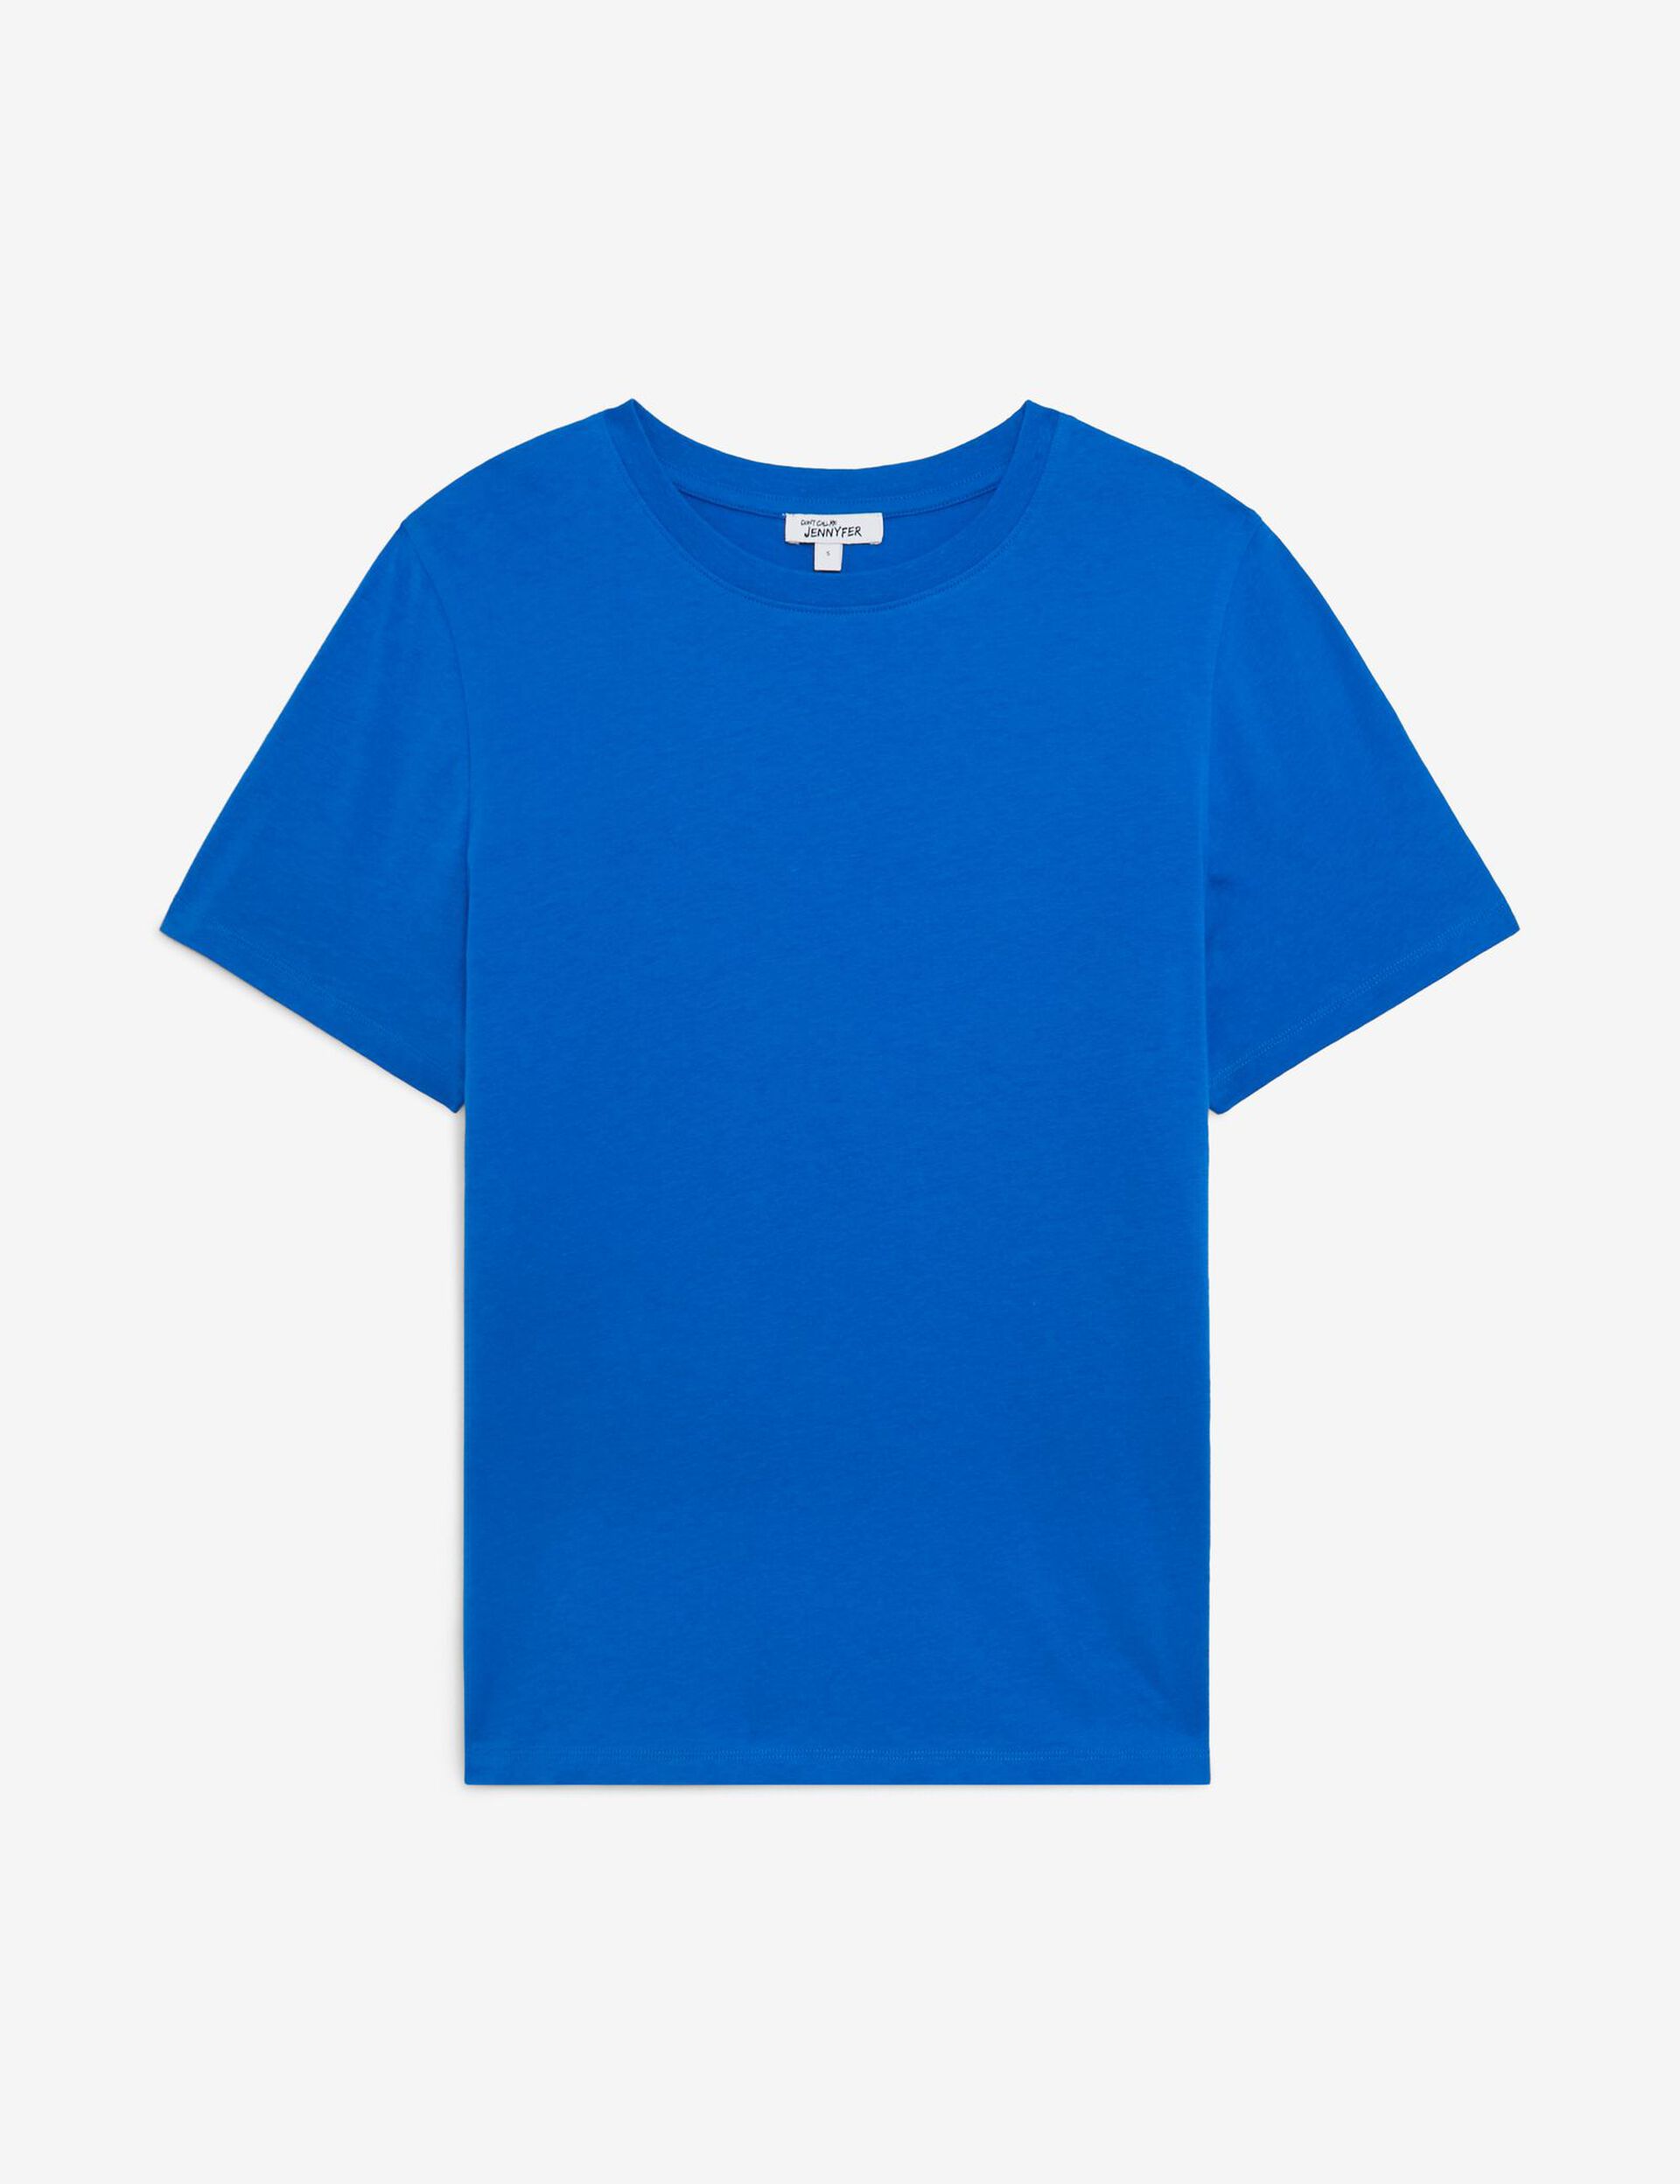 Tee-shirt bleu électrique